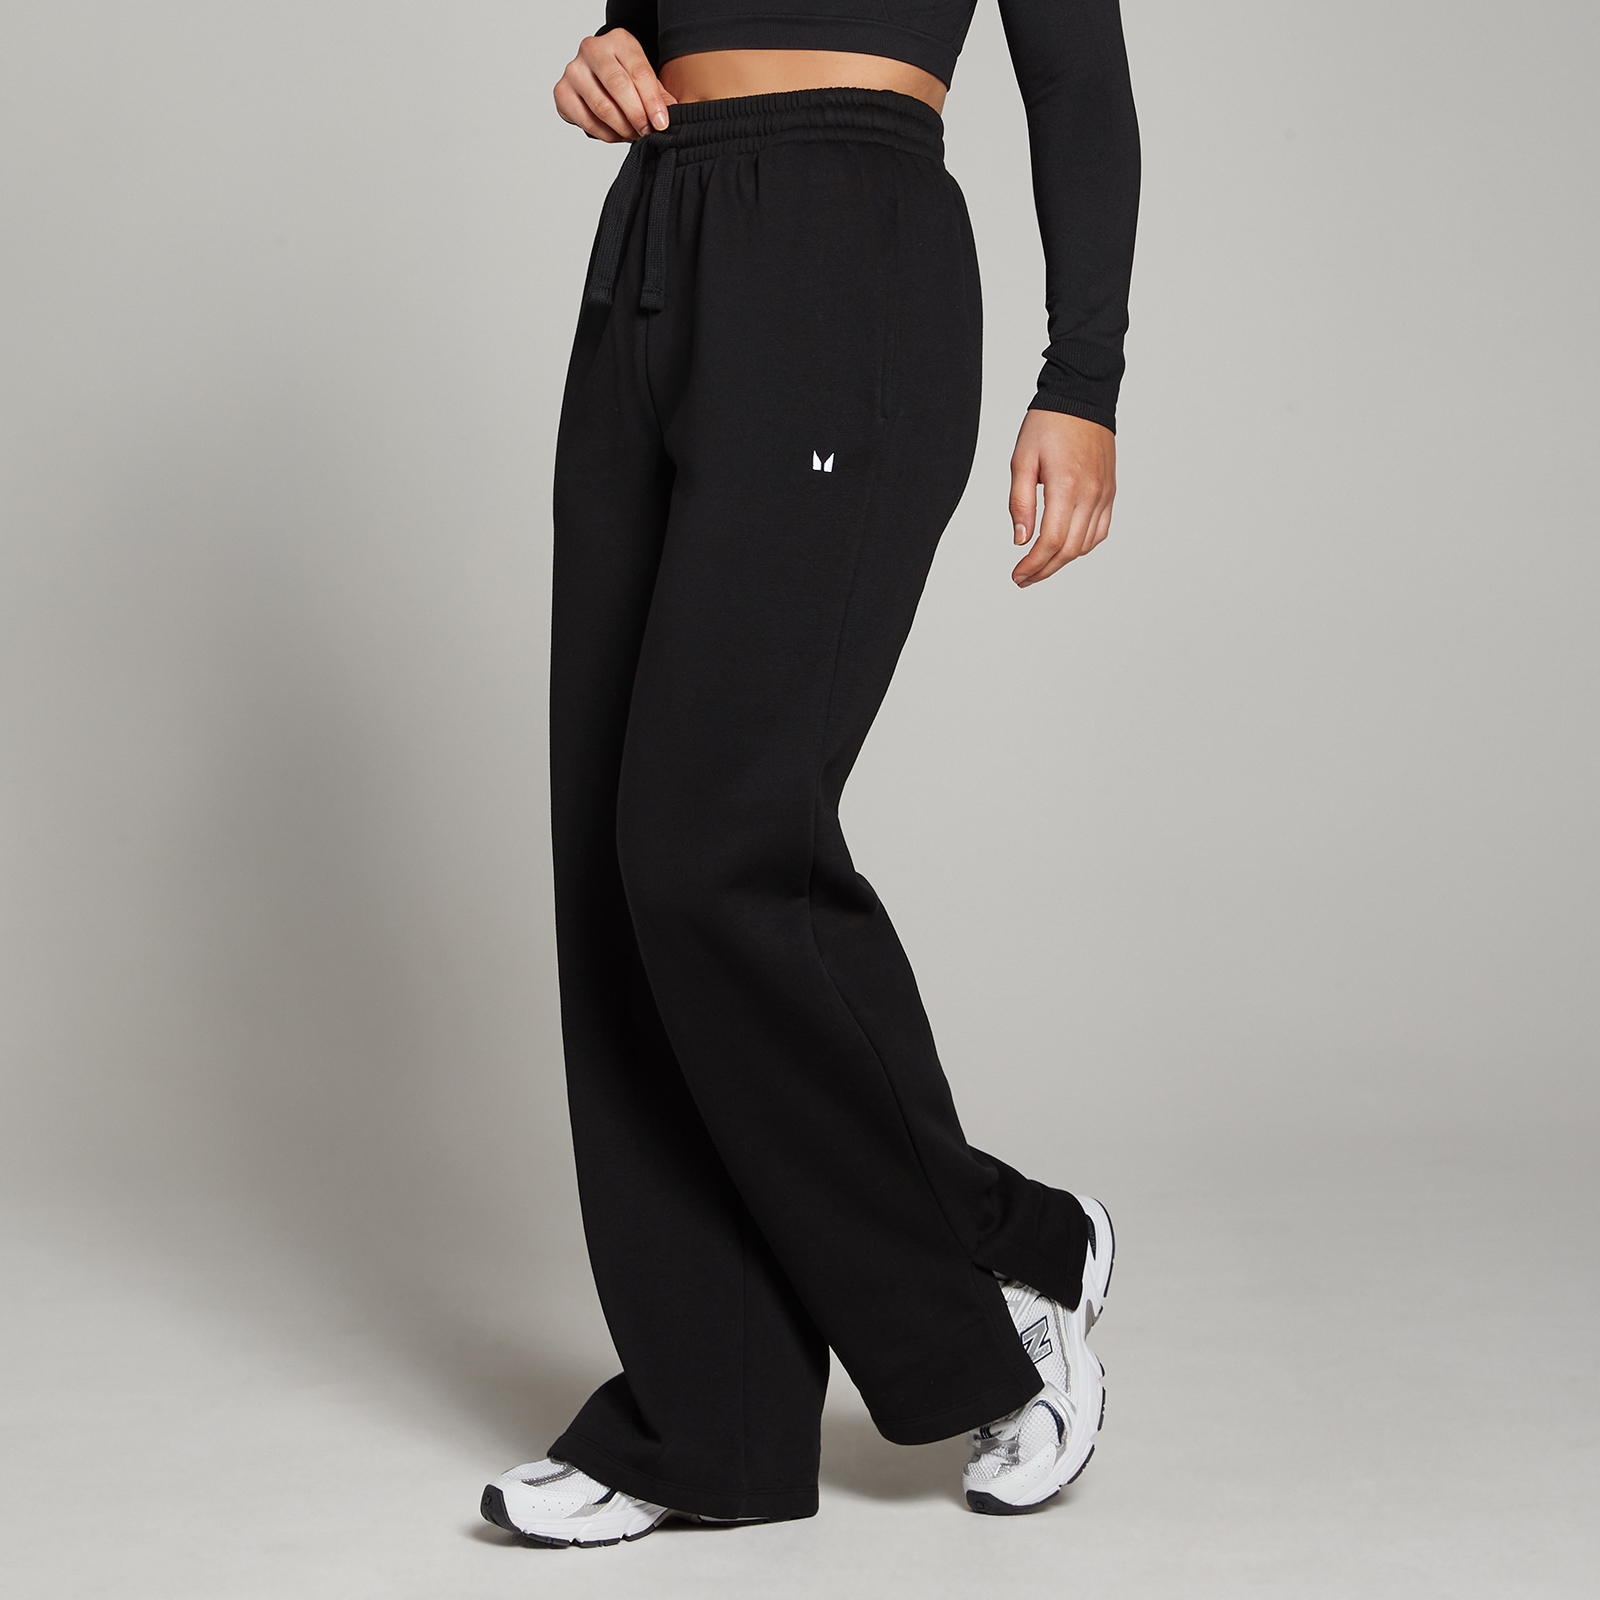 Pantalón deportivo de pernera recta Basics para mujer de MP - Negro - XXL